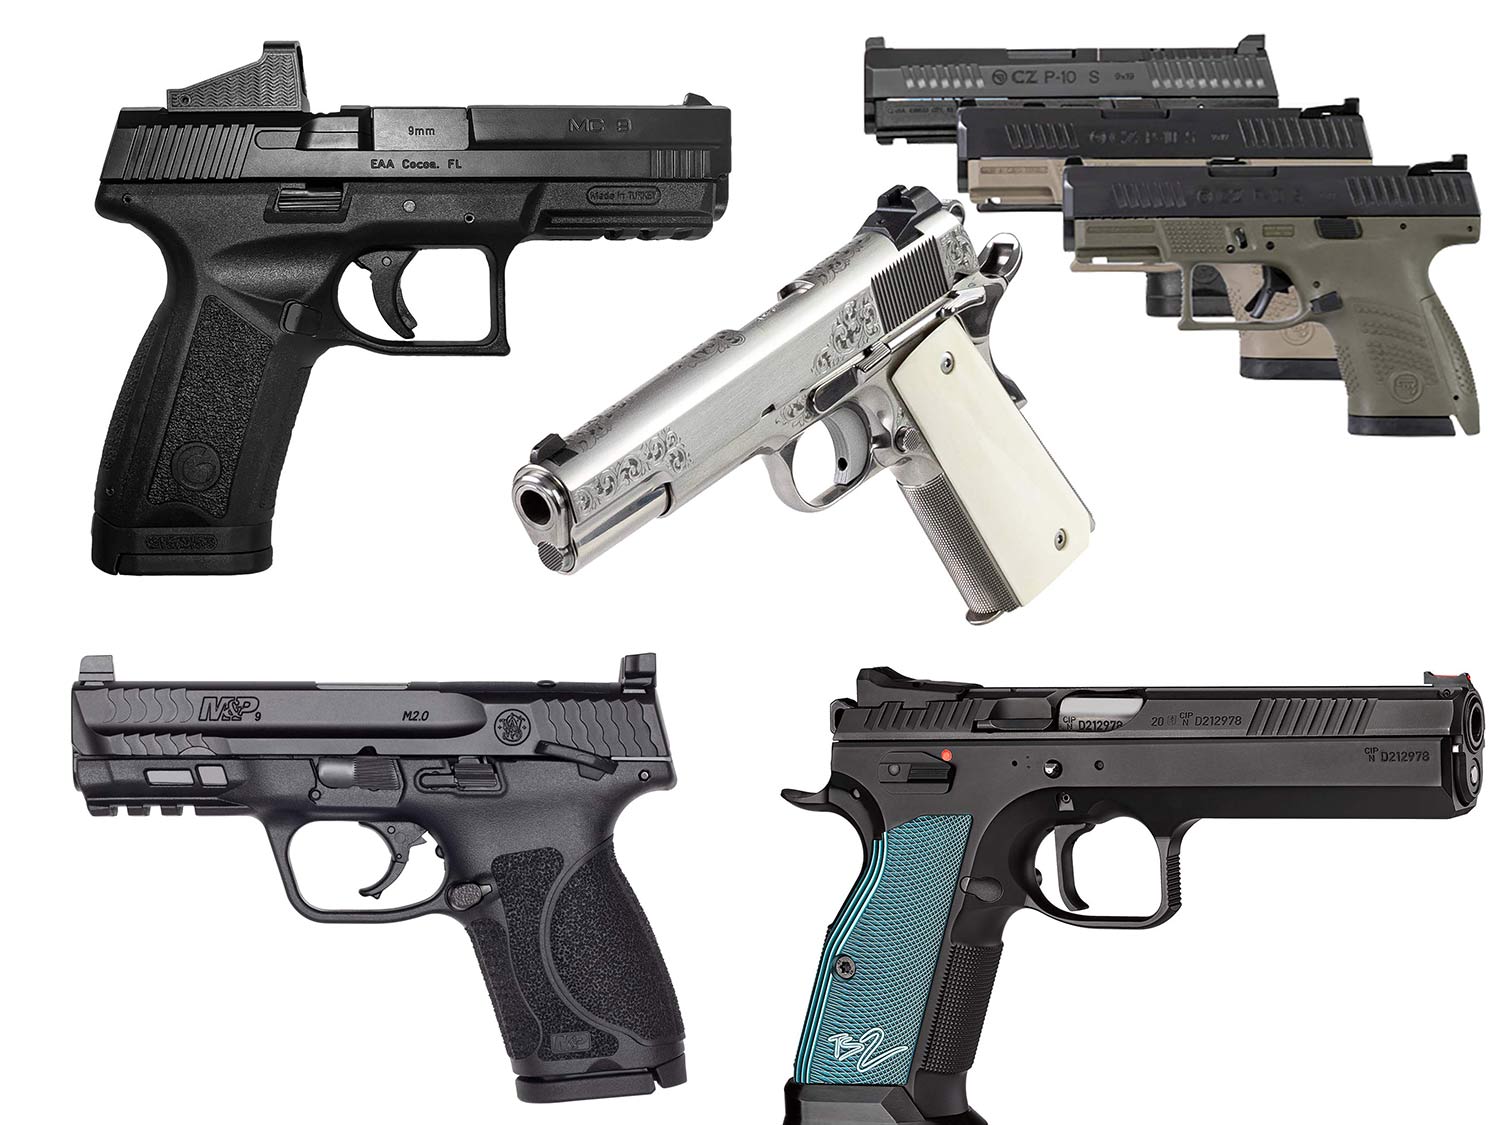 New Models Pistol Manufaters